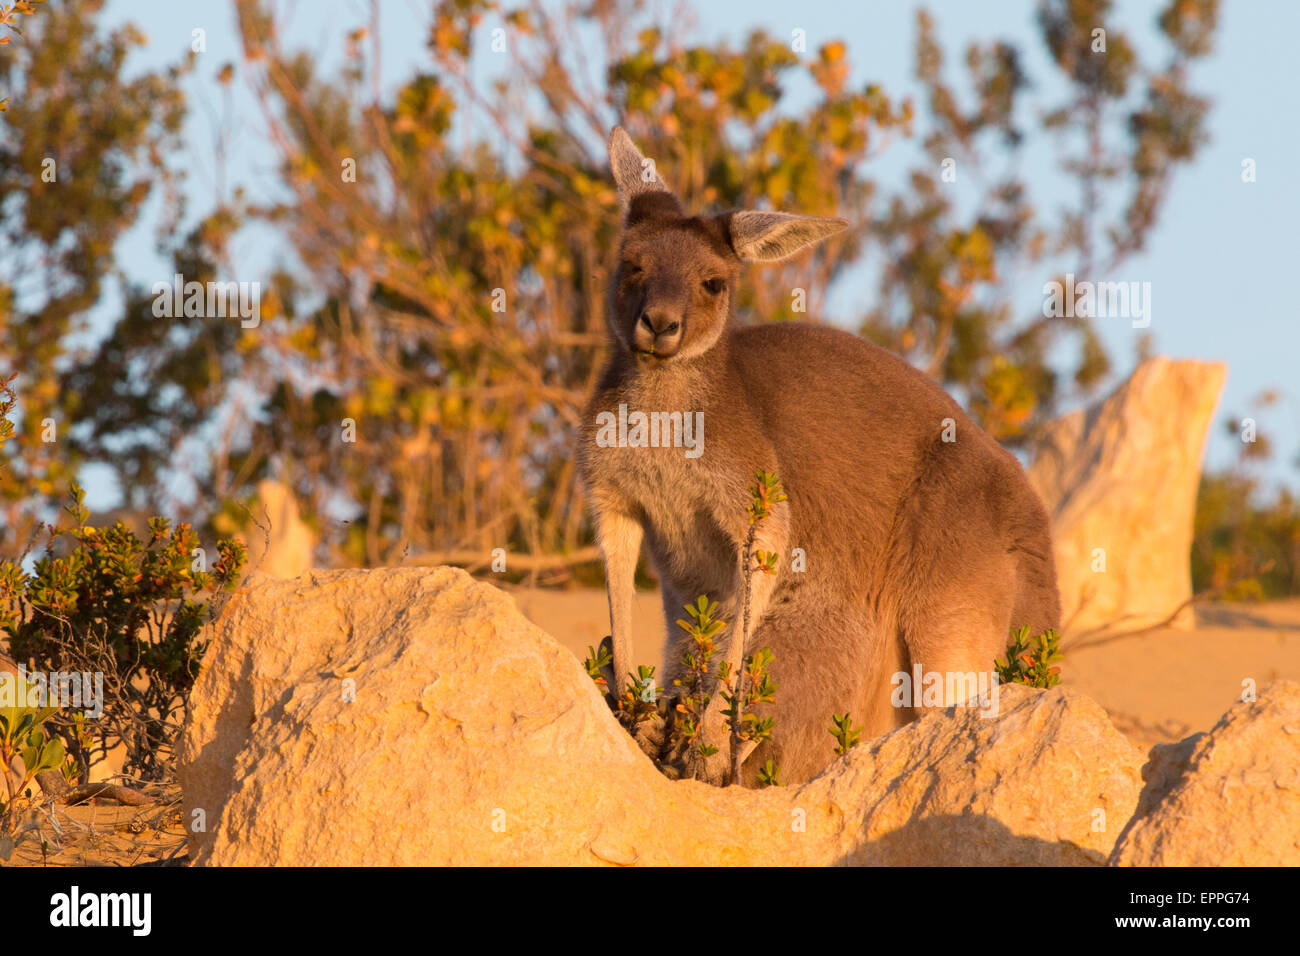 Western Grey Kangaroo (Macropus fuliginosus) Stock Photo